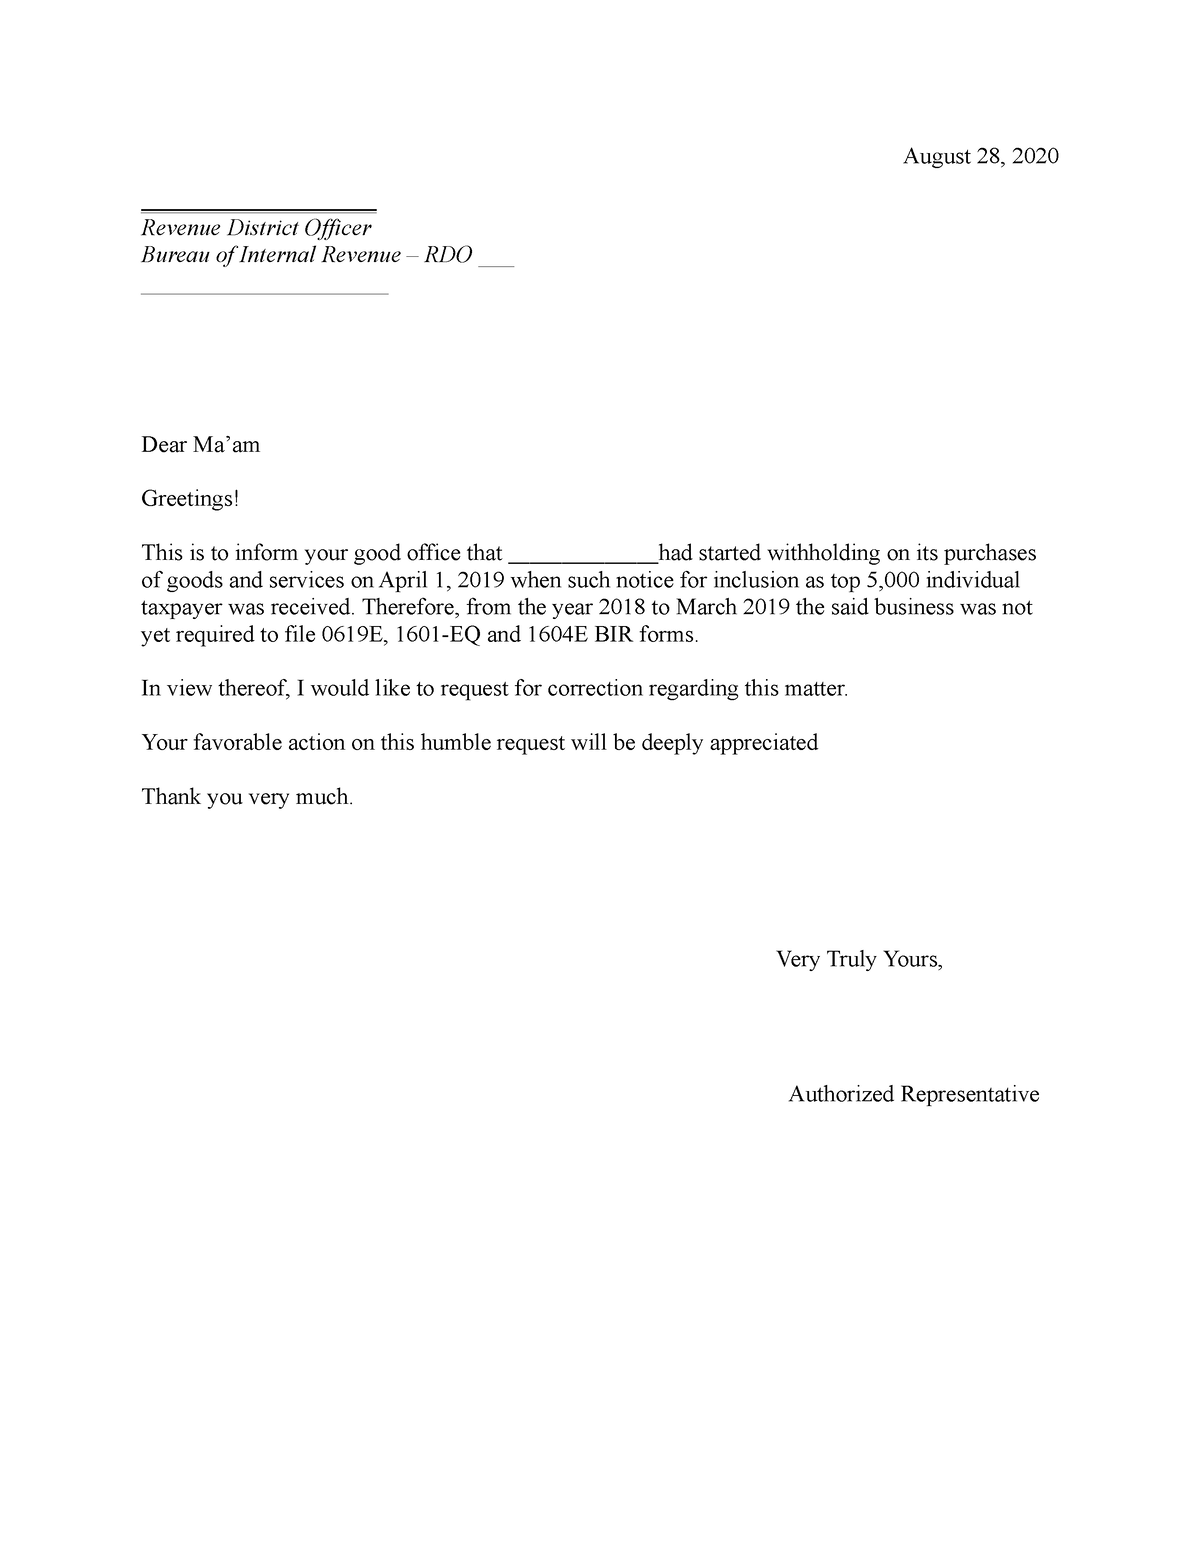 Sample letter for correction - August 28, 2020 Revenue District Officer ...